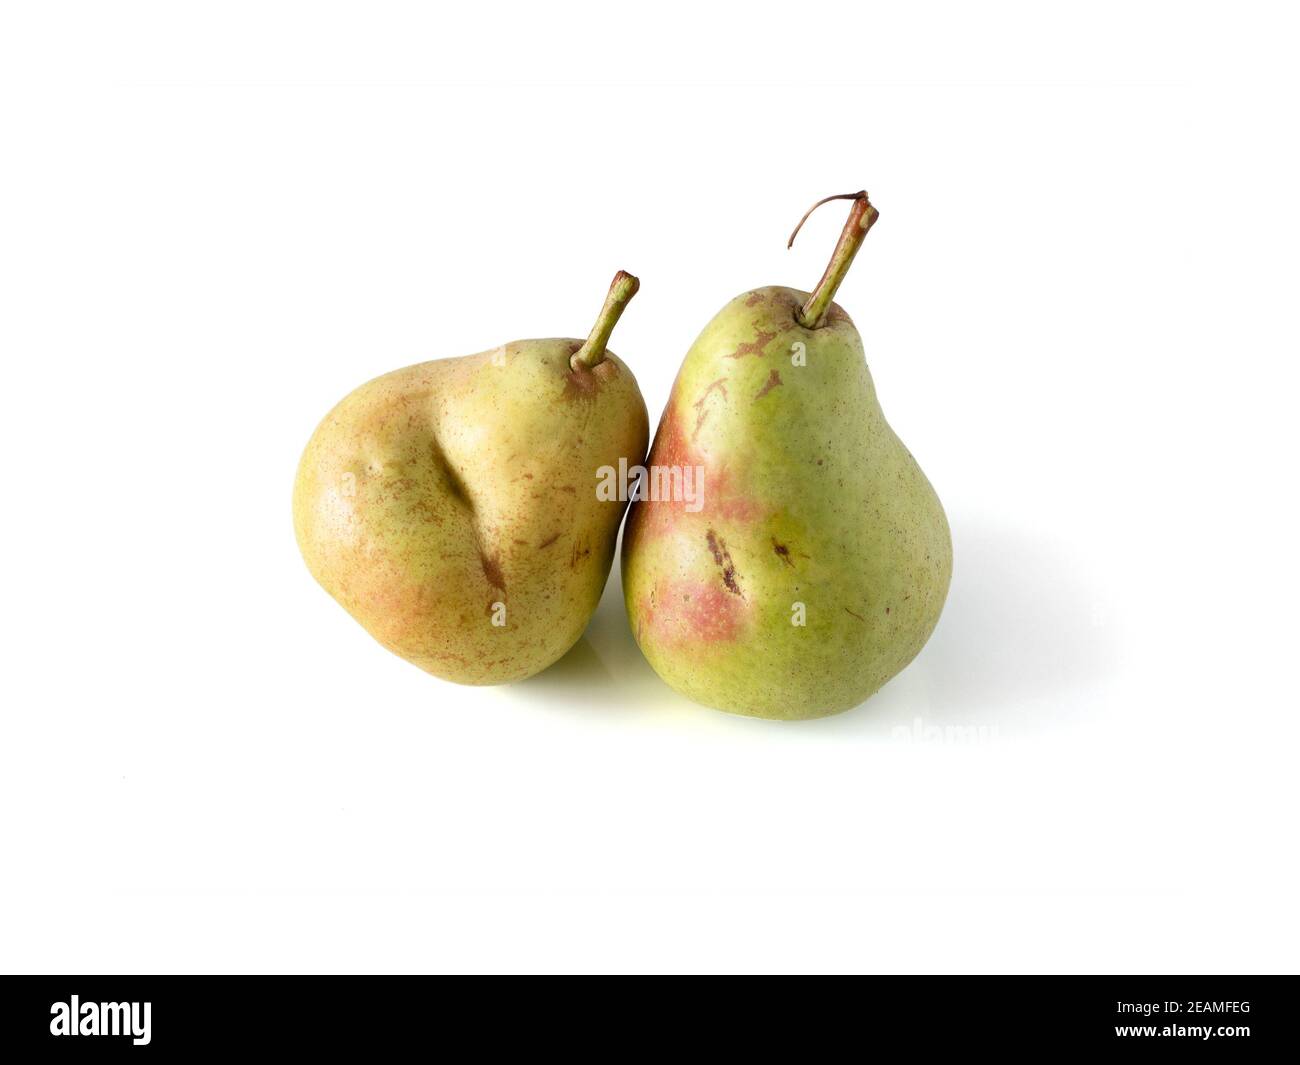 https://c8.alamy.com/comp/2EAMFEG/two-organic-not-perfect-pears-isolated-2EAMFEG.jpg